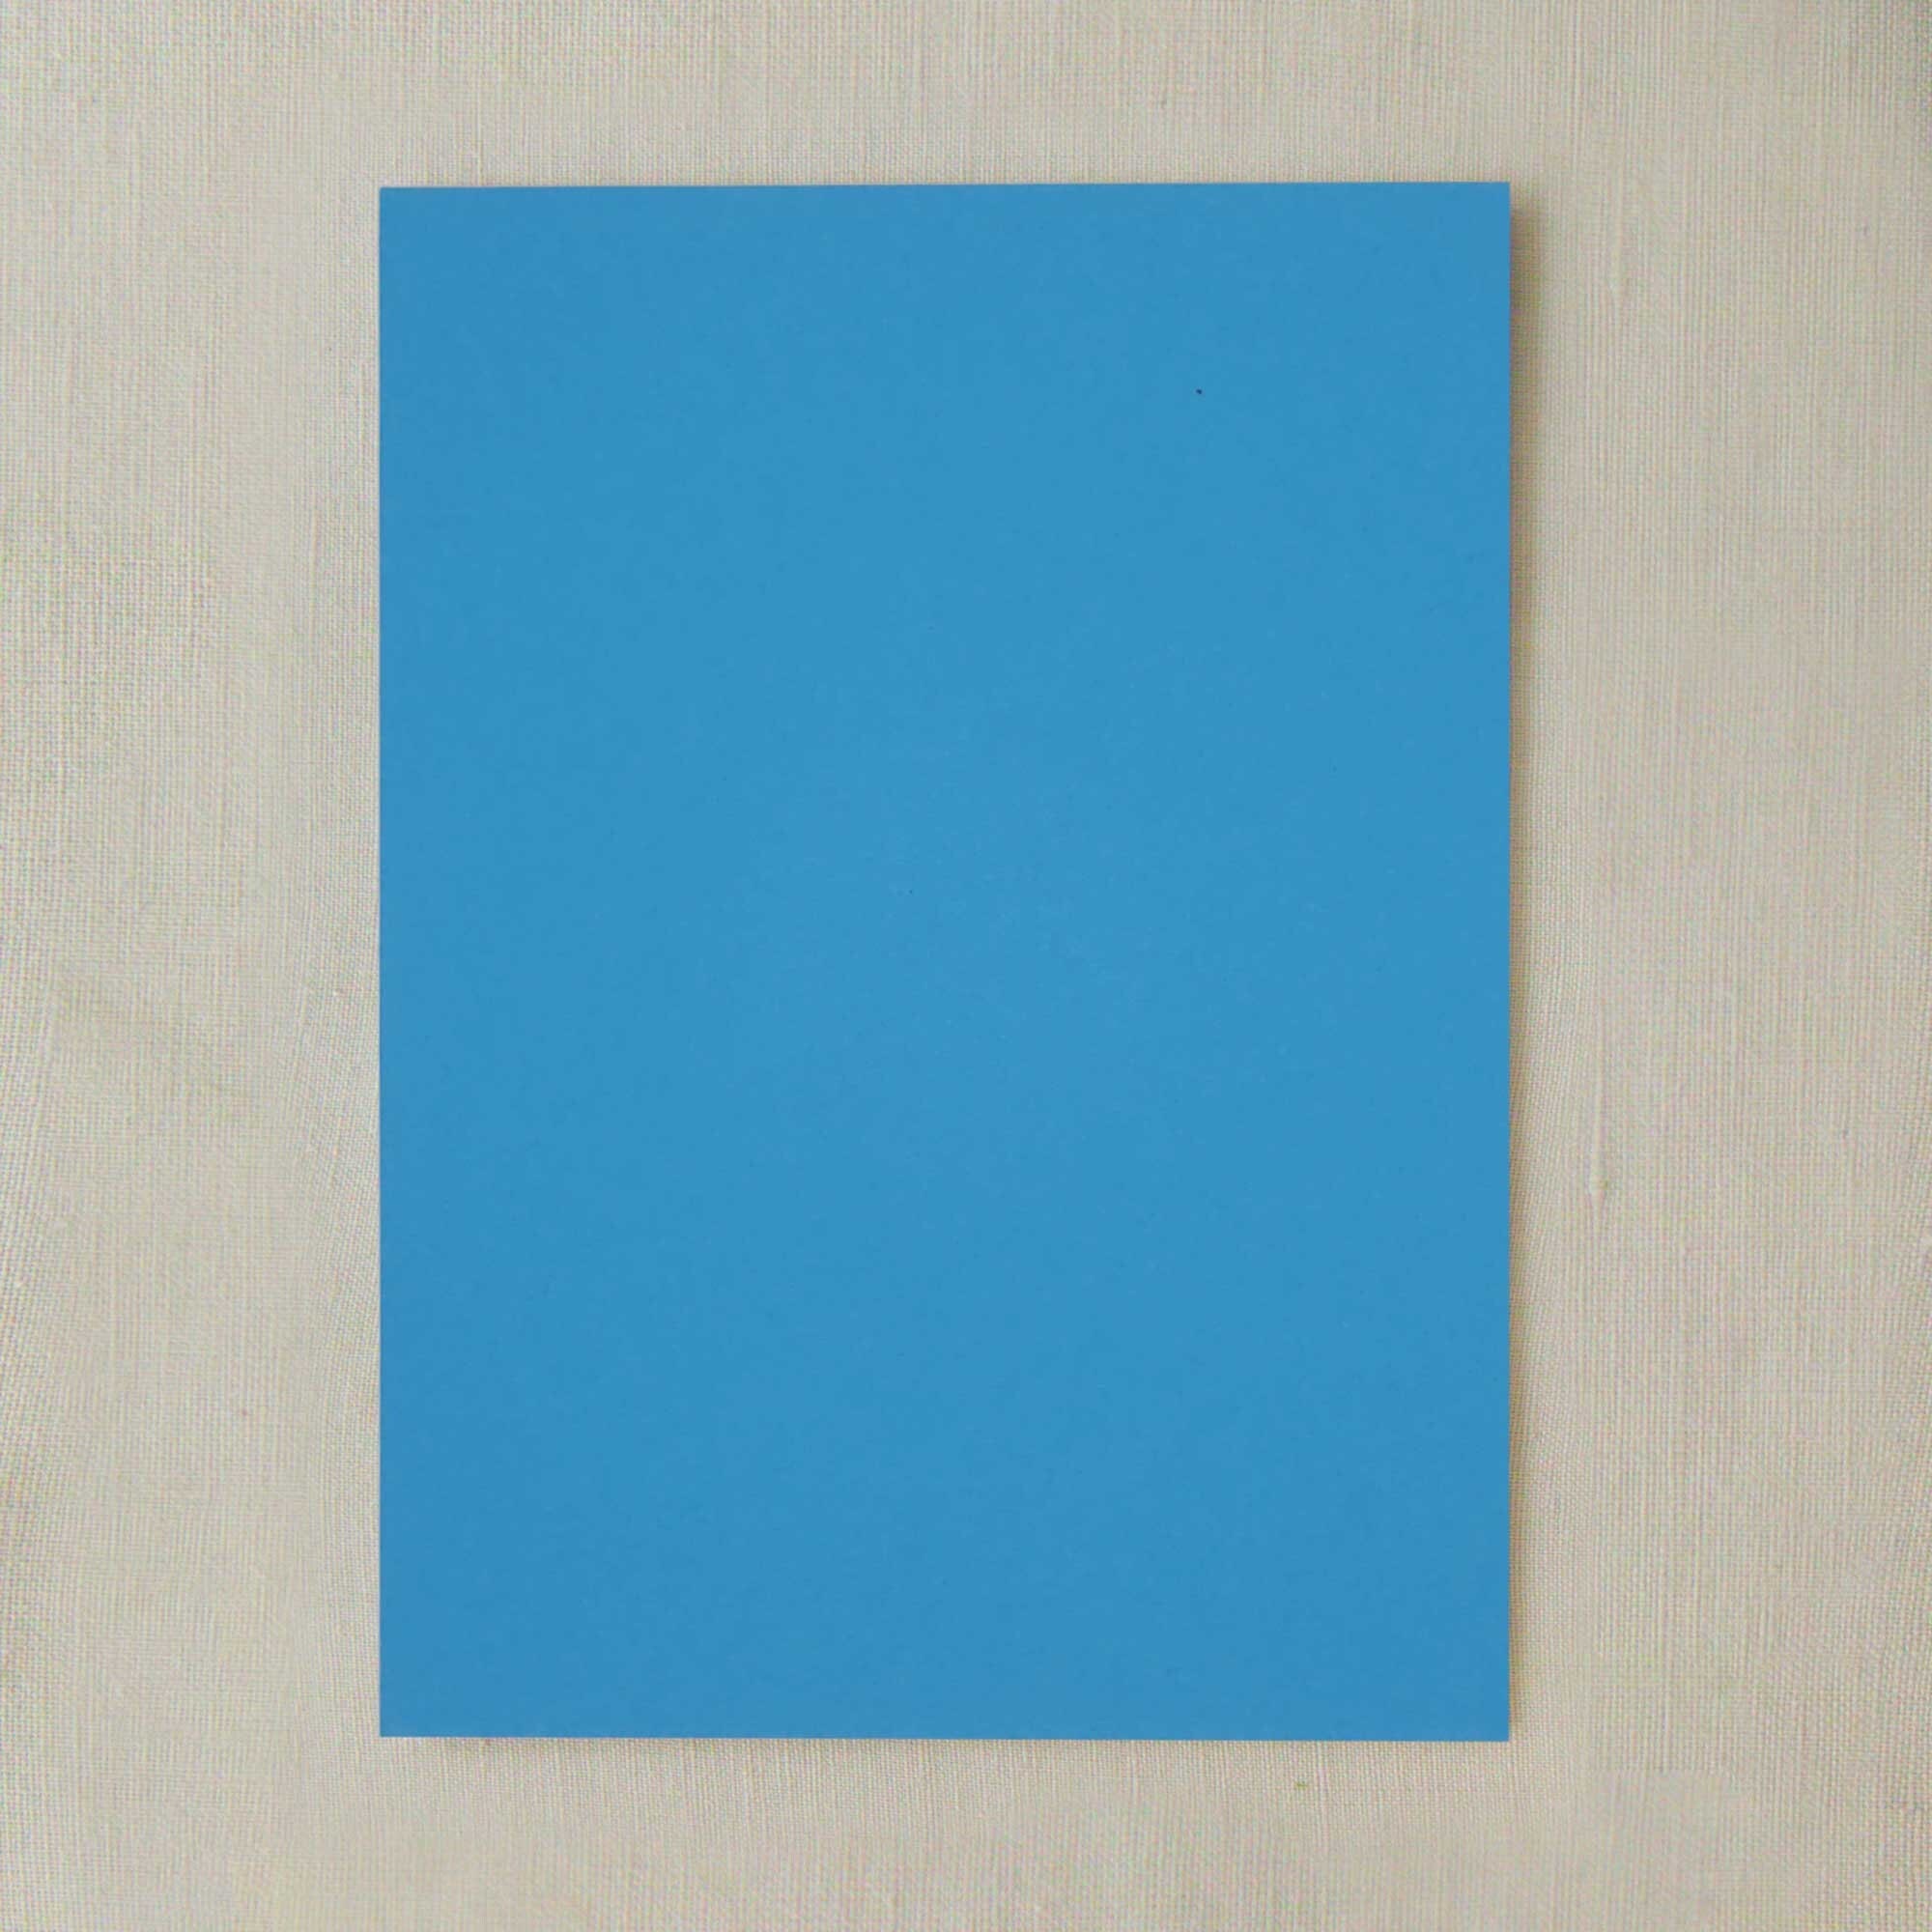 Dusty Blue Cardstock Paper